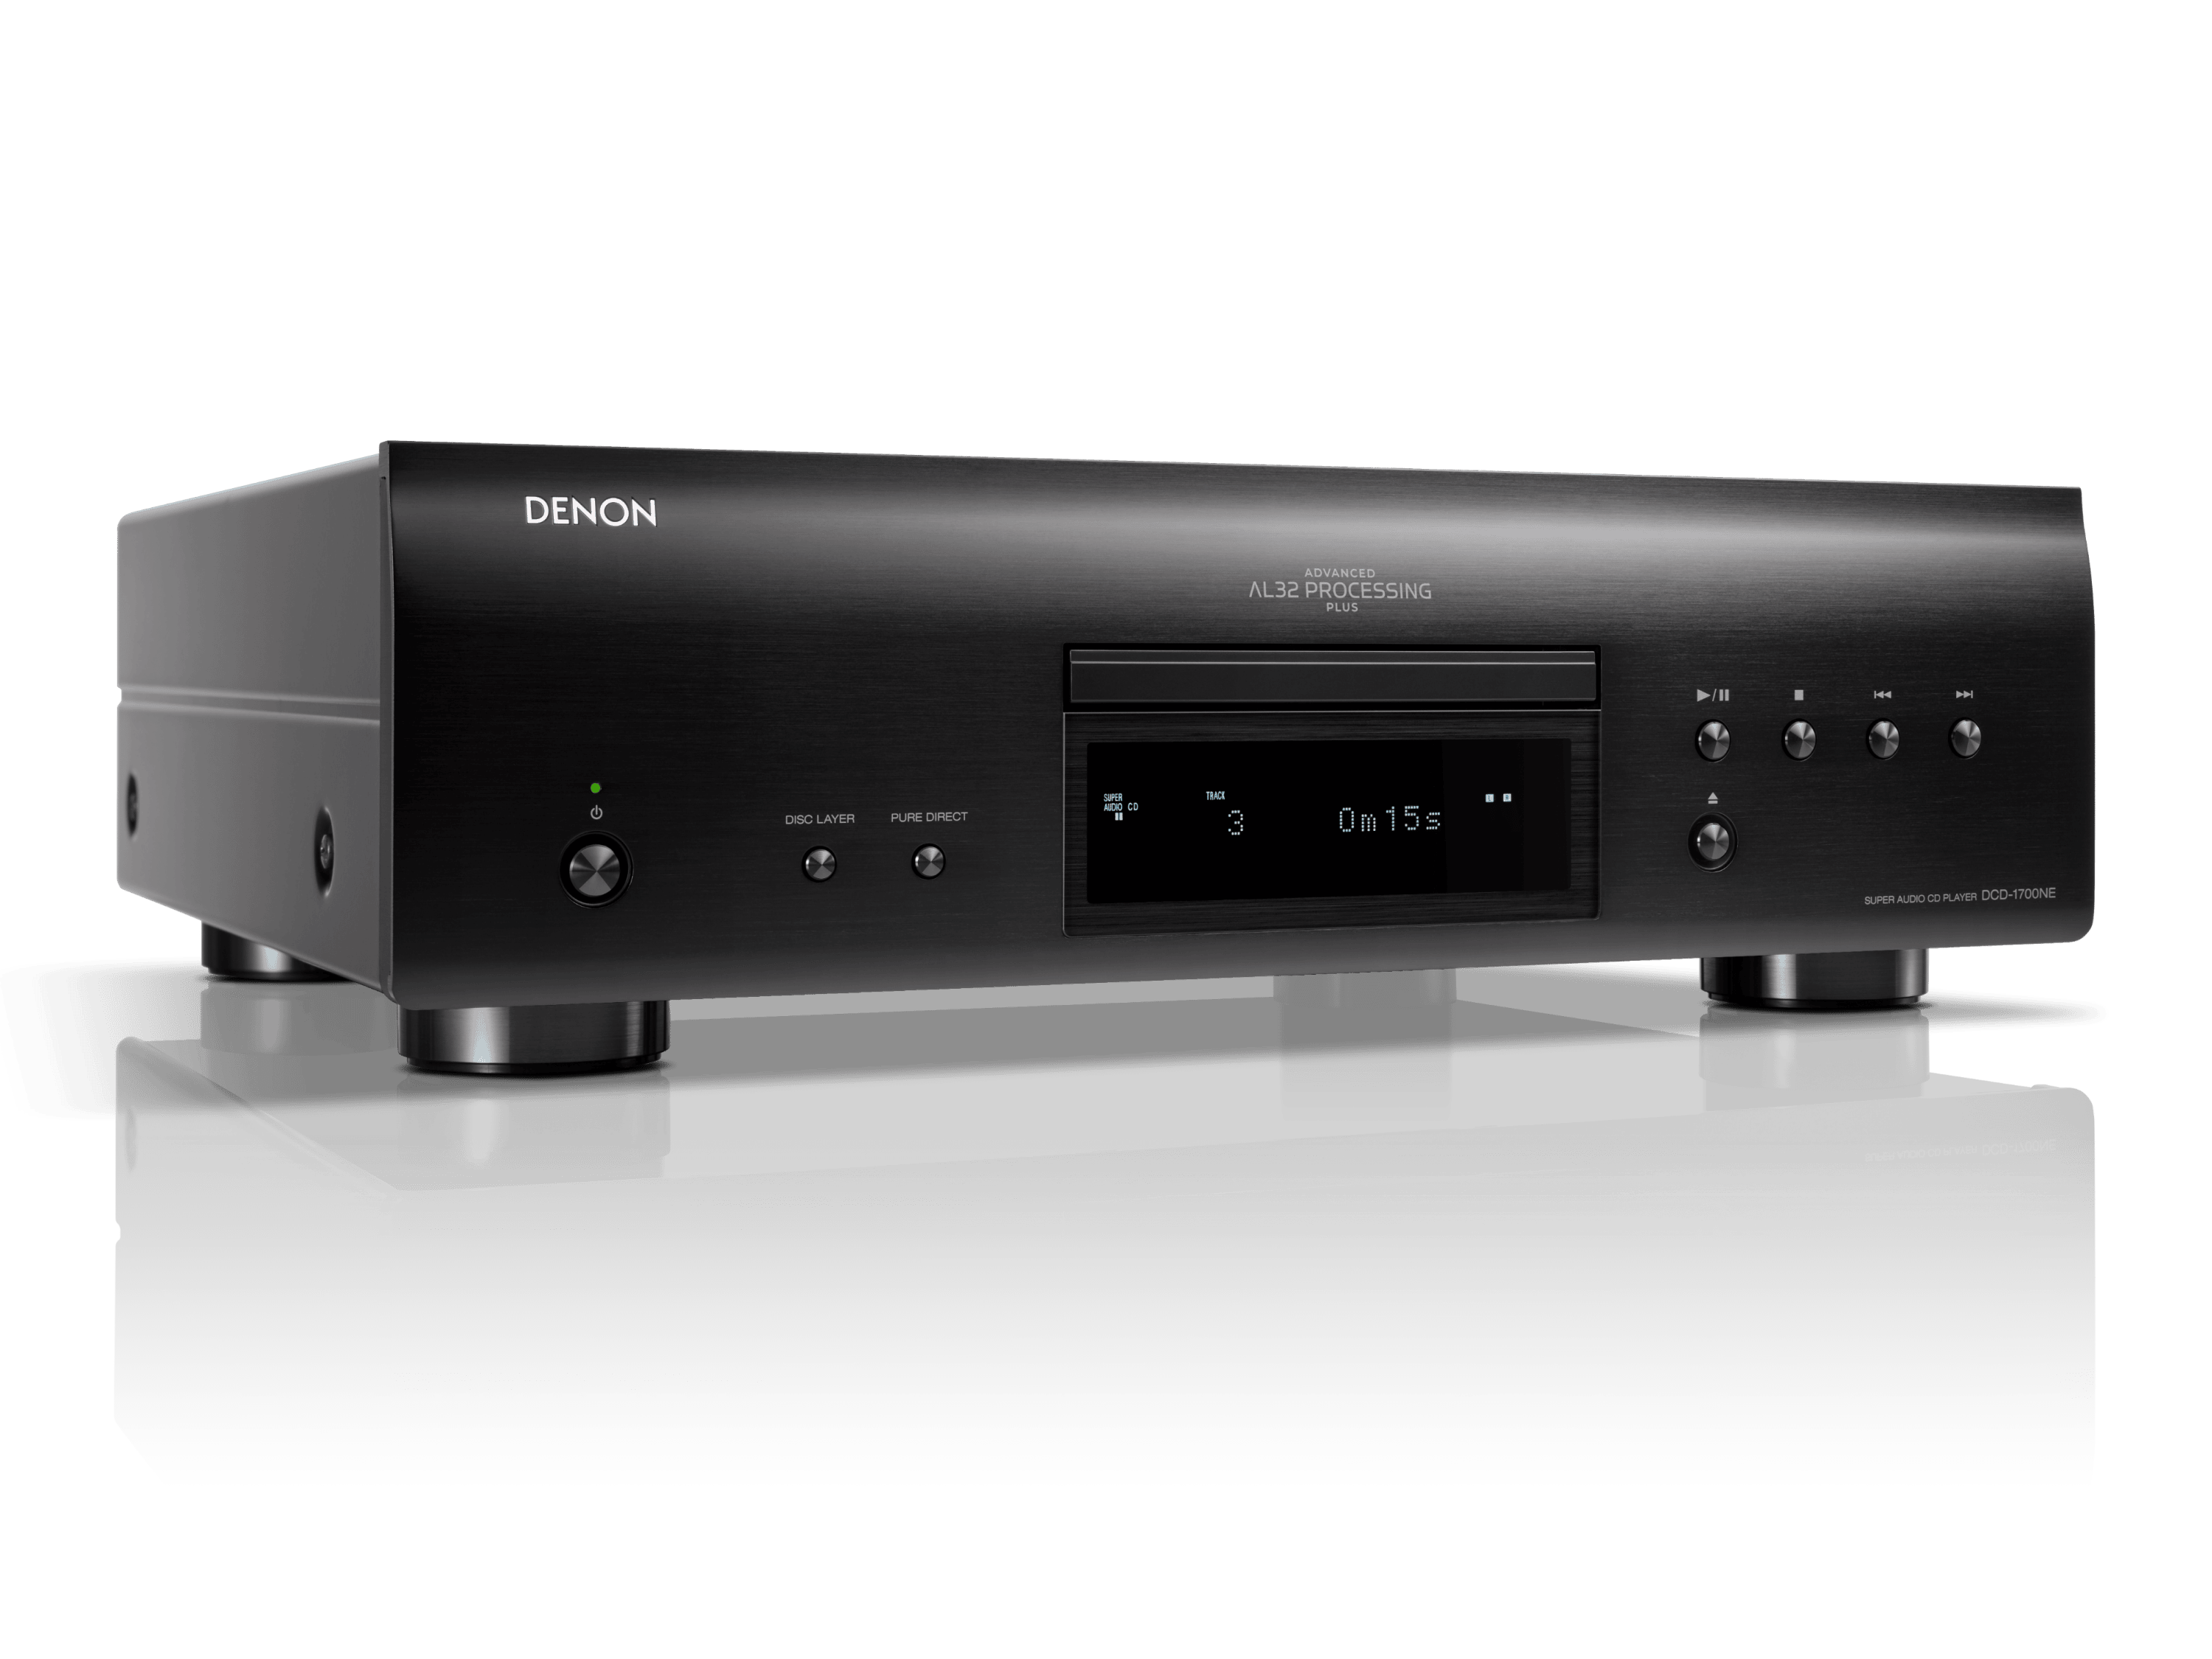 DCD-1700NE - CD/SACD-Player mit Advanced Europe - Plus Denon AL32 Processing | DCD-1700NE